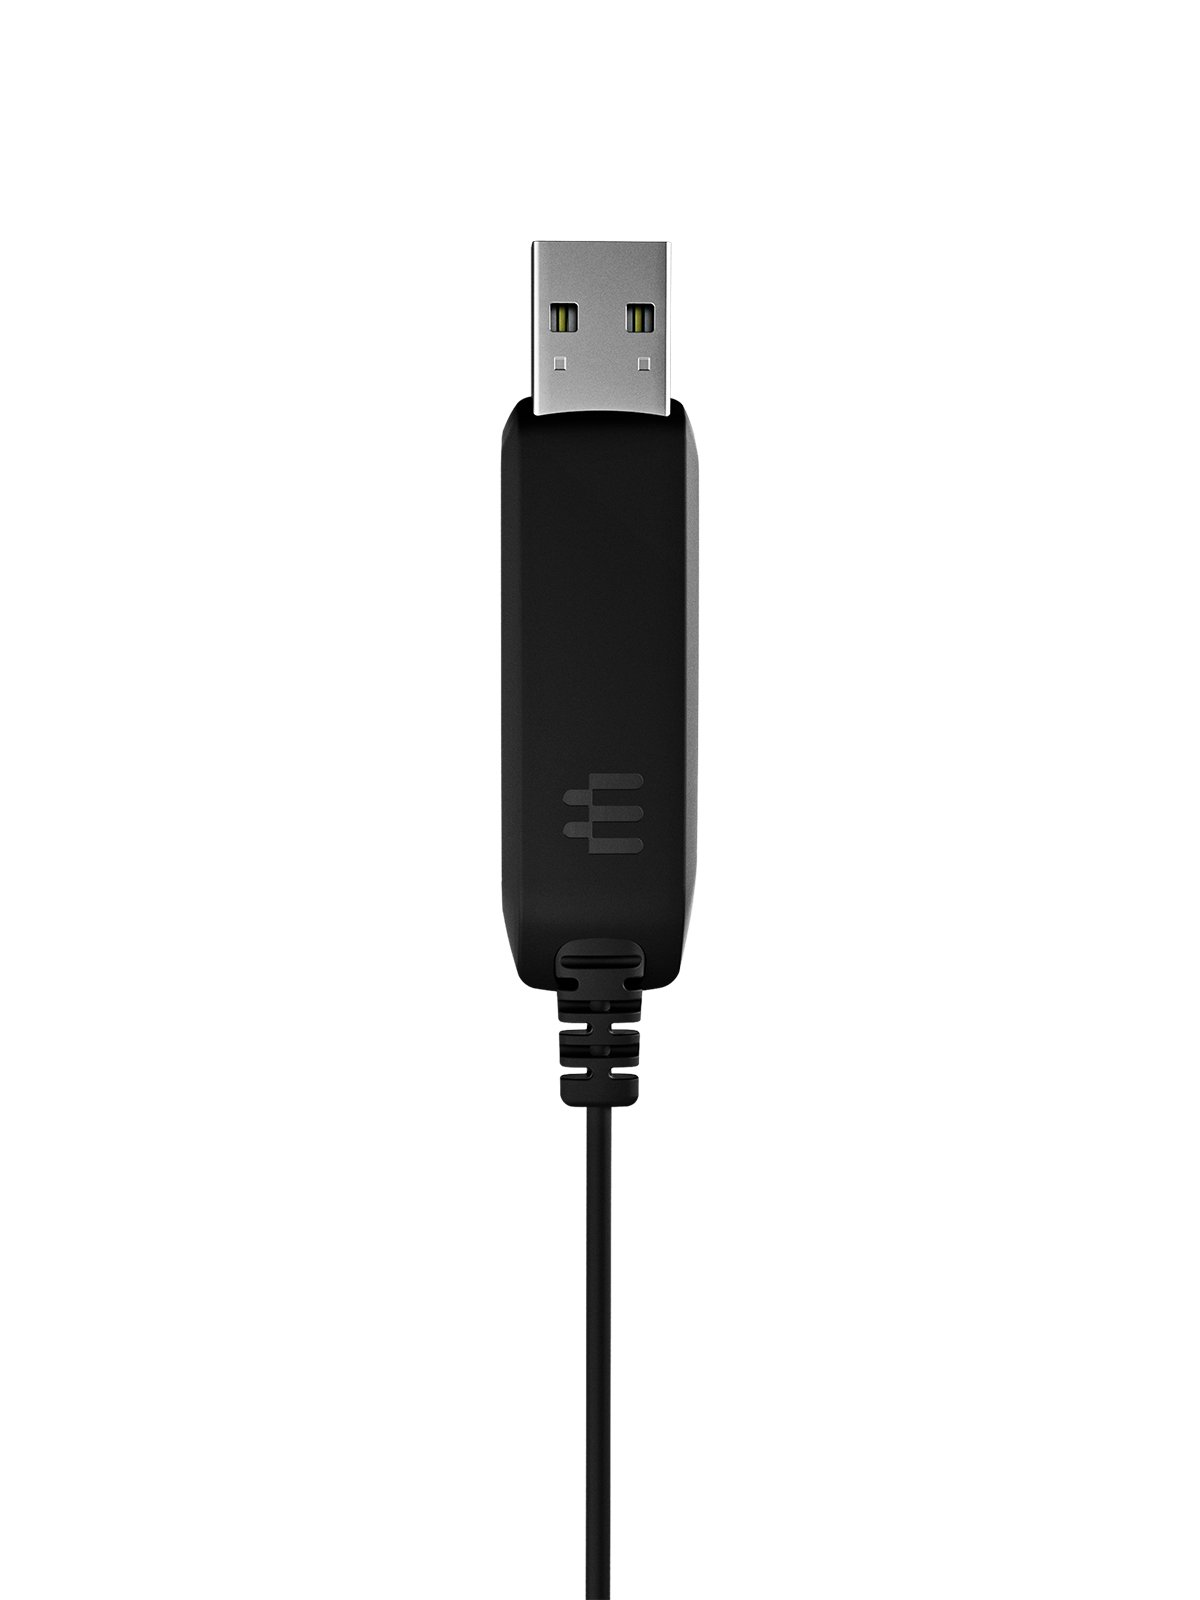 PC 7 USB Mono USB Headset